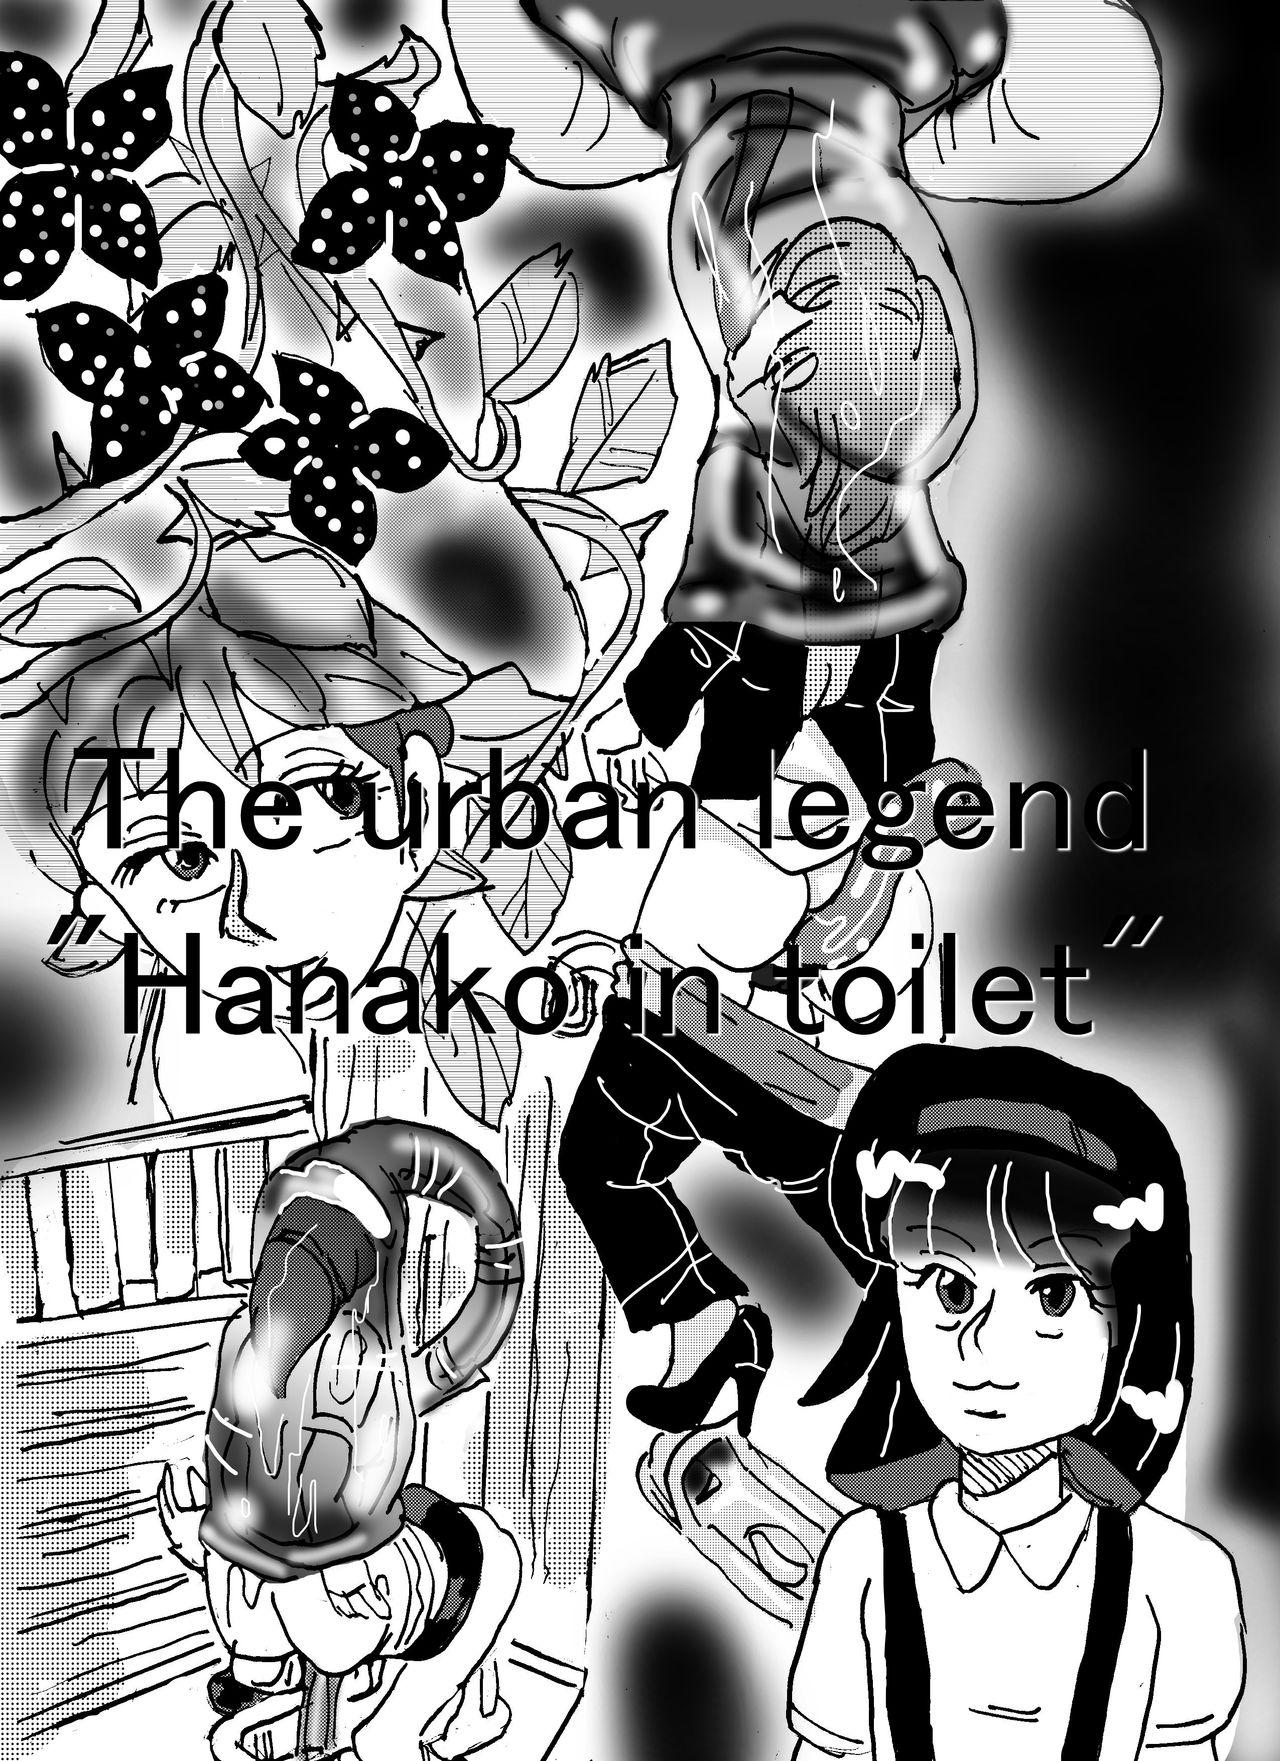 Old Man Urban legend "Ha*ako in toilet" - Original Brasil - Page 1